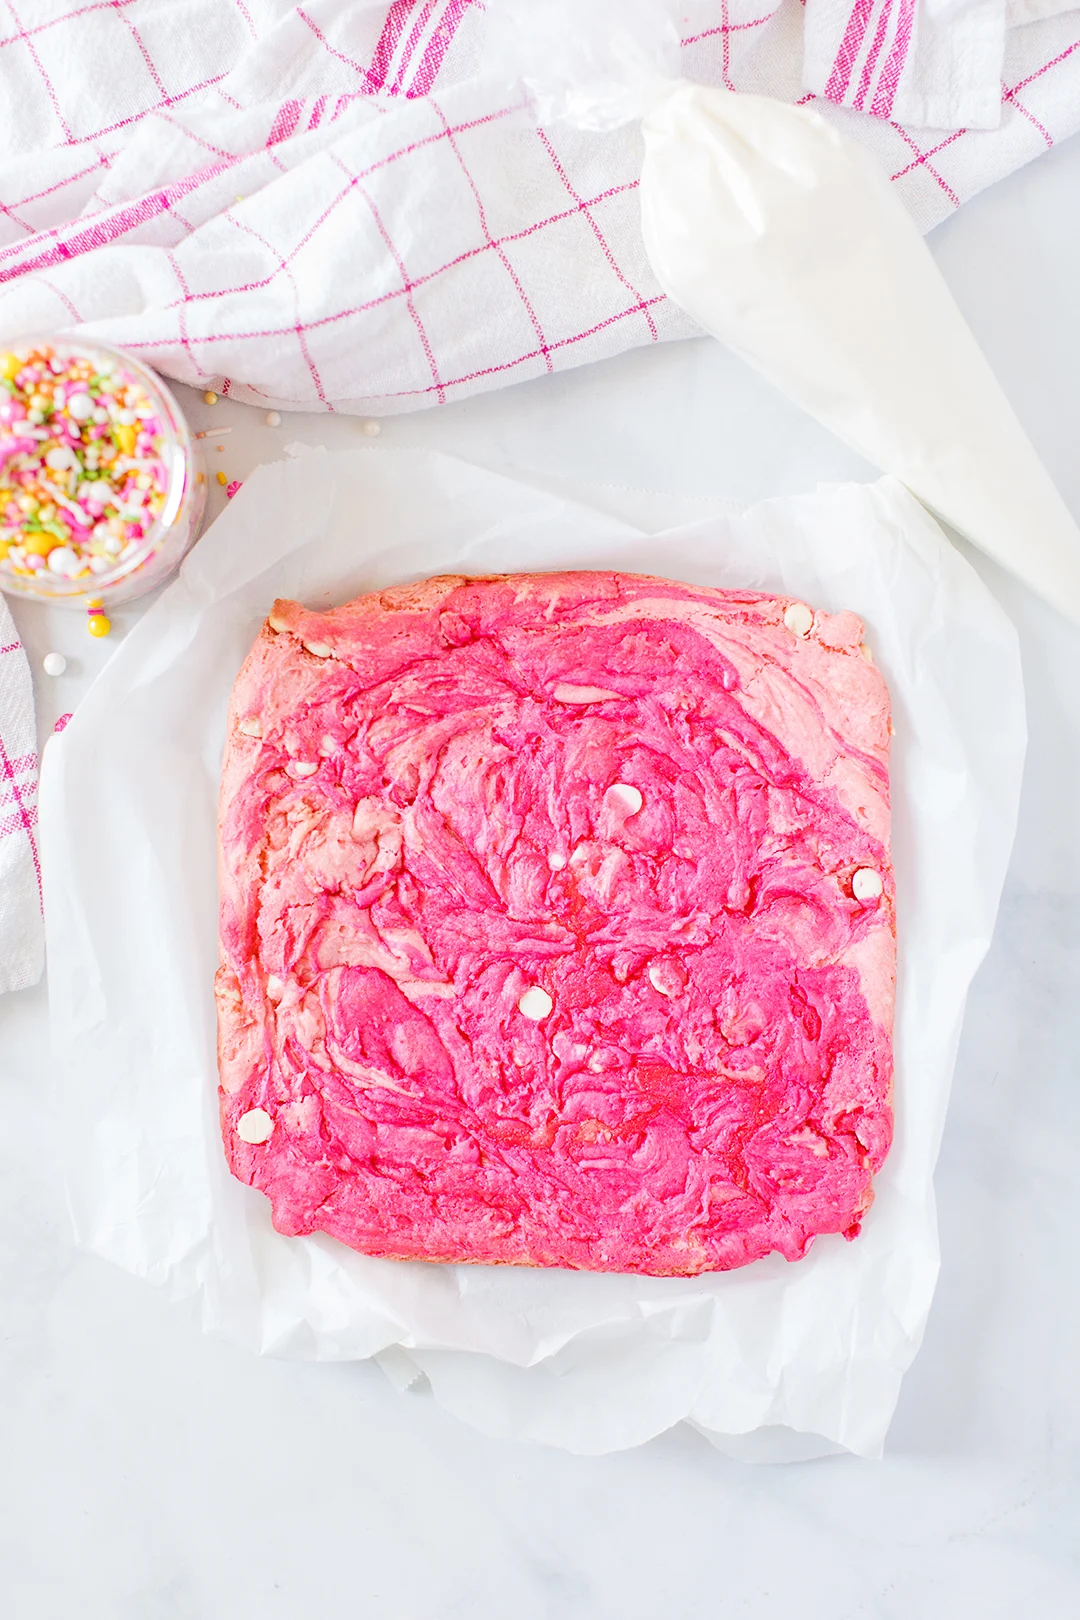 pink swirled blondie bars in baking dish